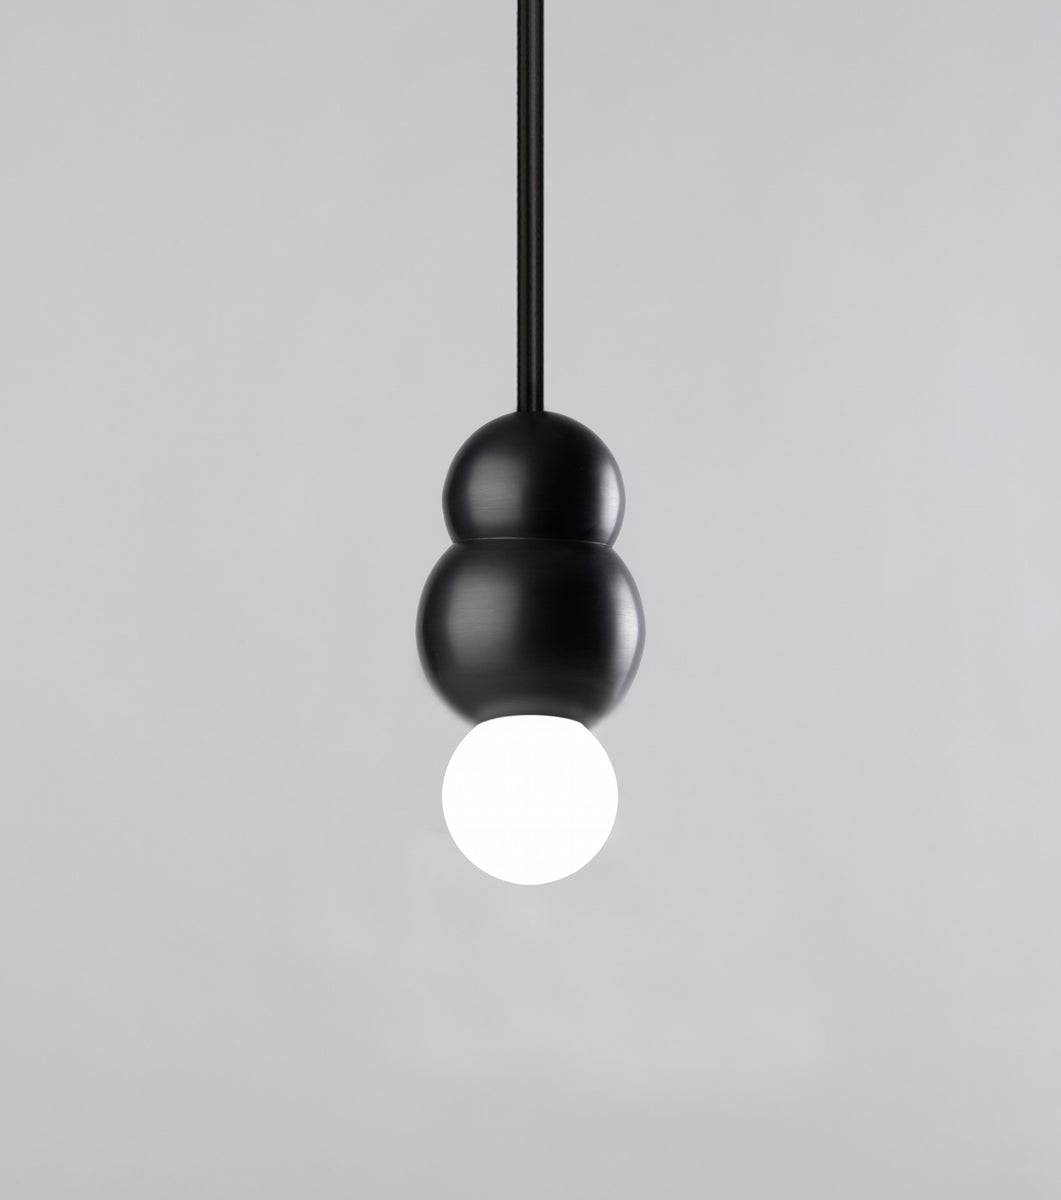 Straight Hanging Ball Light Small Pendant Rod Black Patinated Michael Anastassiades - Image 1